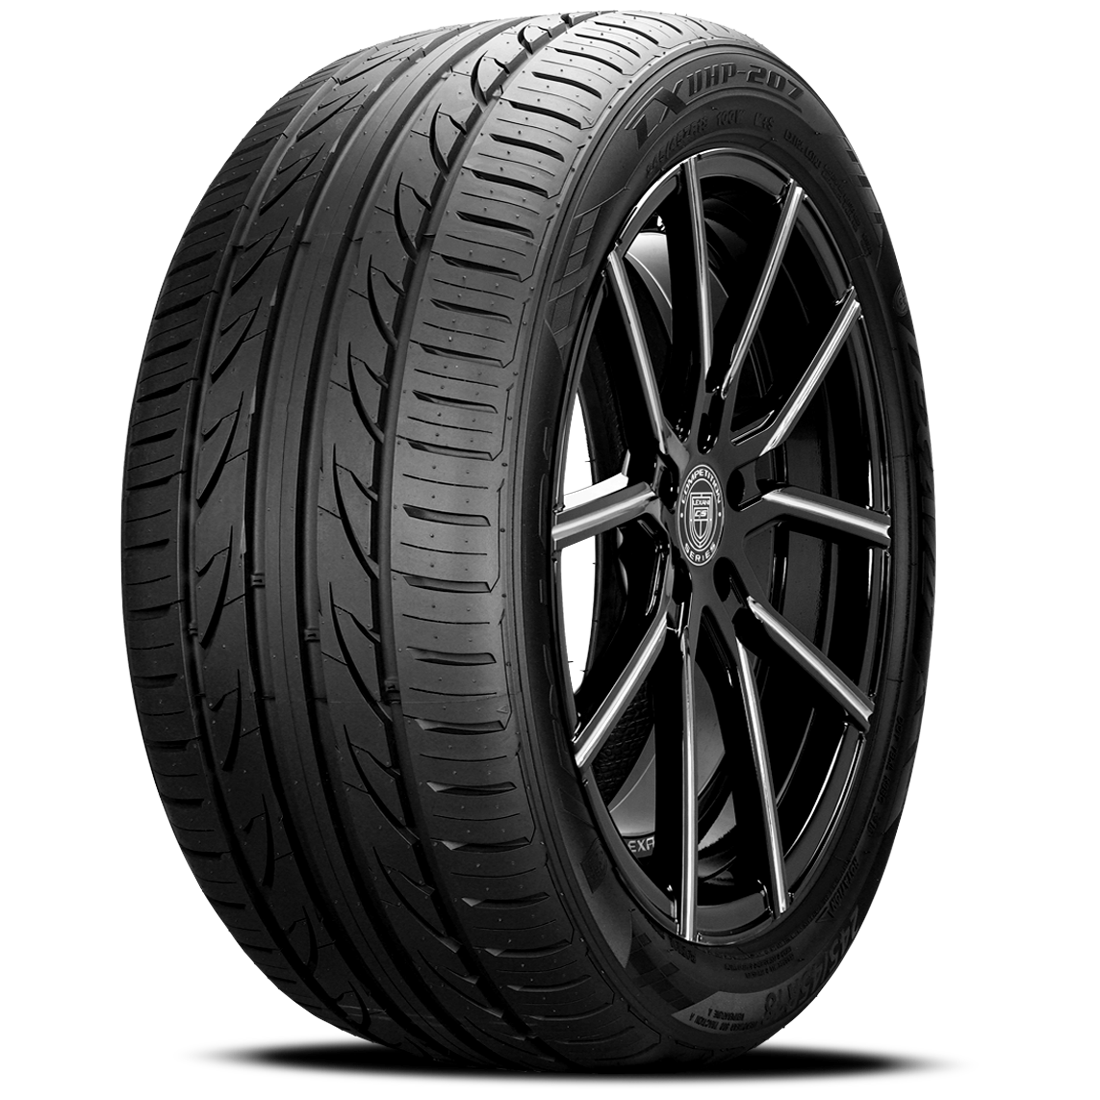 LEXANI LXUHP-207 235/45ZR17 (25.4X9.3R 17) Tires